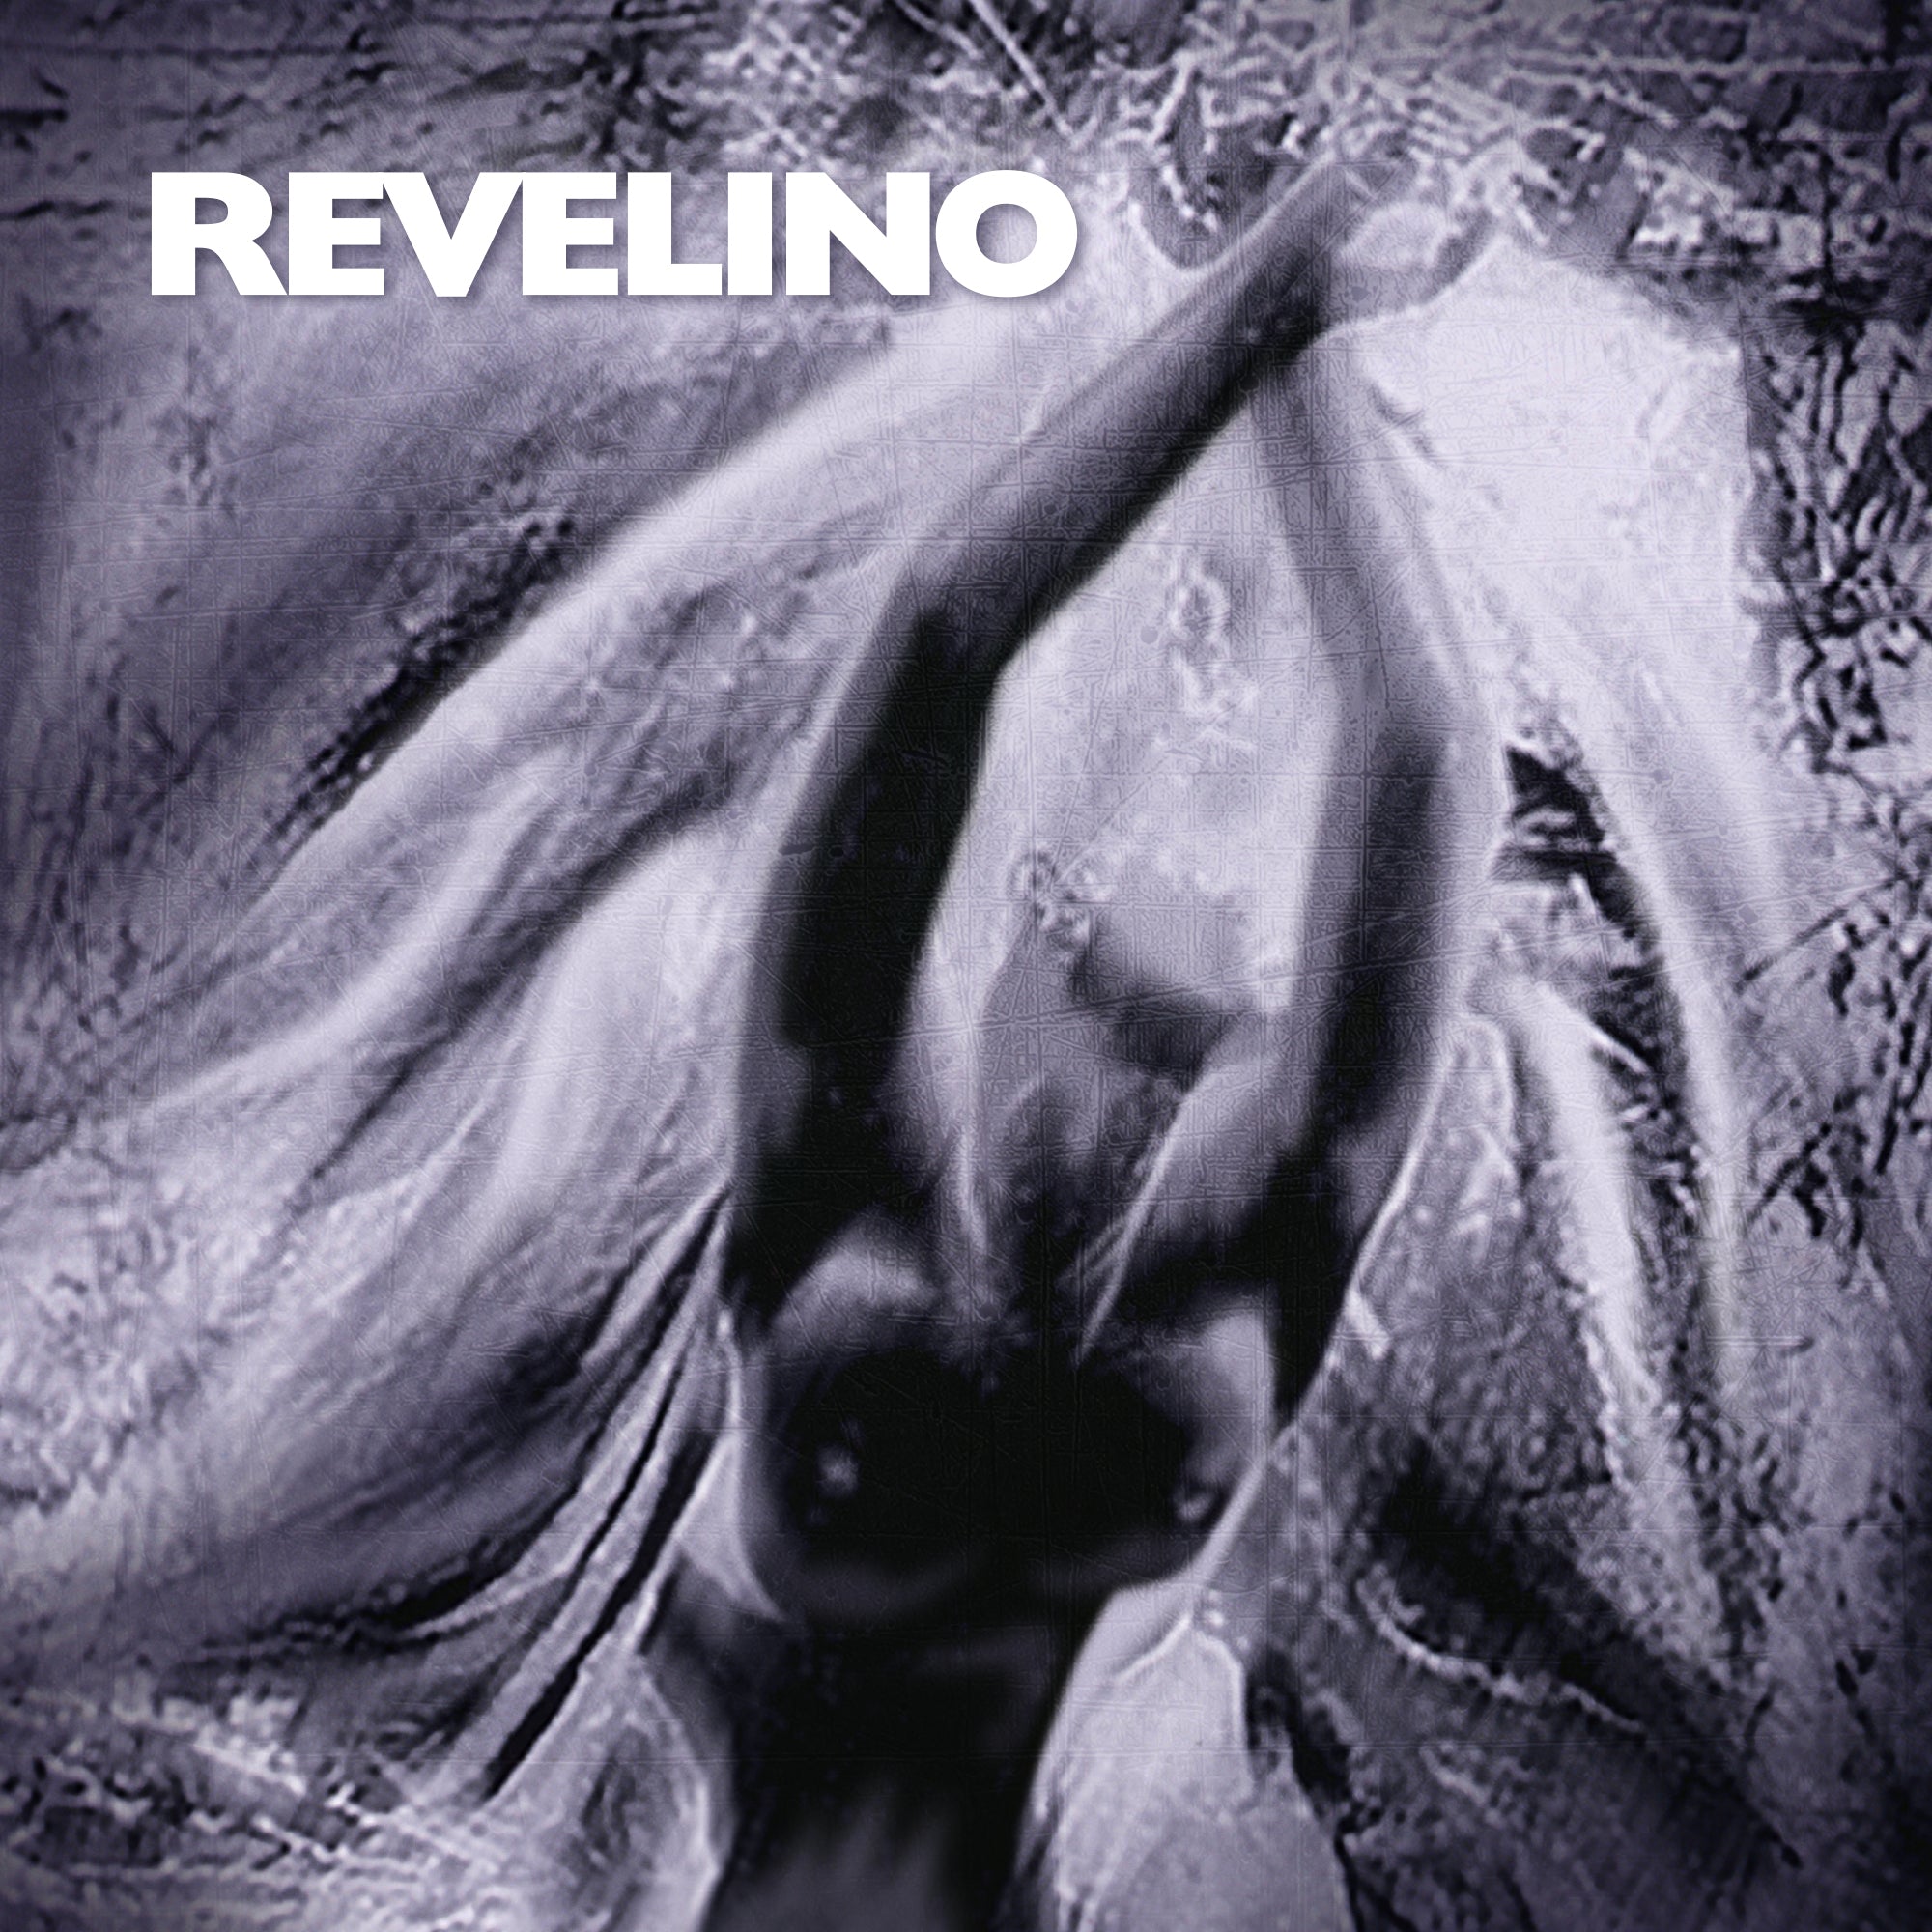 REVELINO – Revelino / Happiness Is Mine (Remix) – LP+12″ – Limited Black / Gold Vinyl